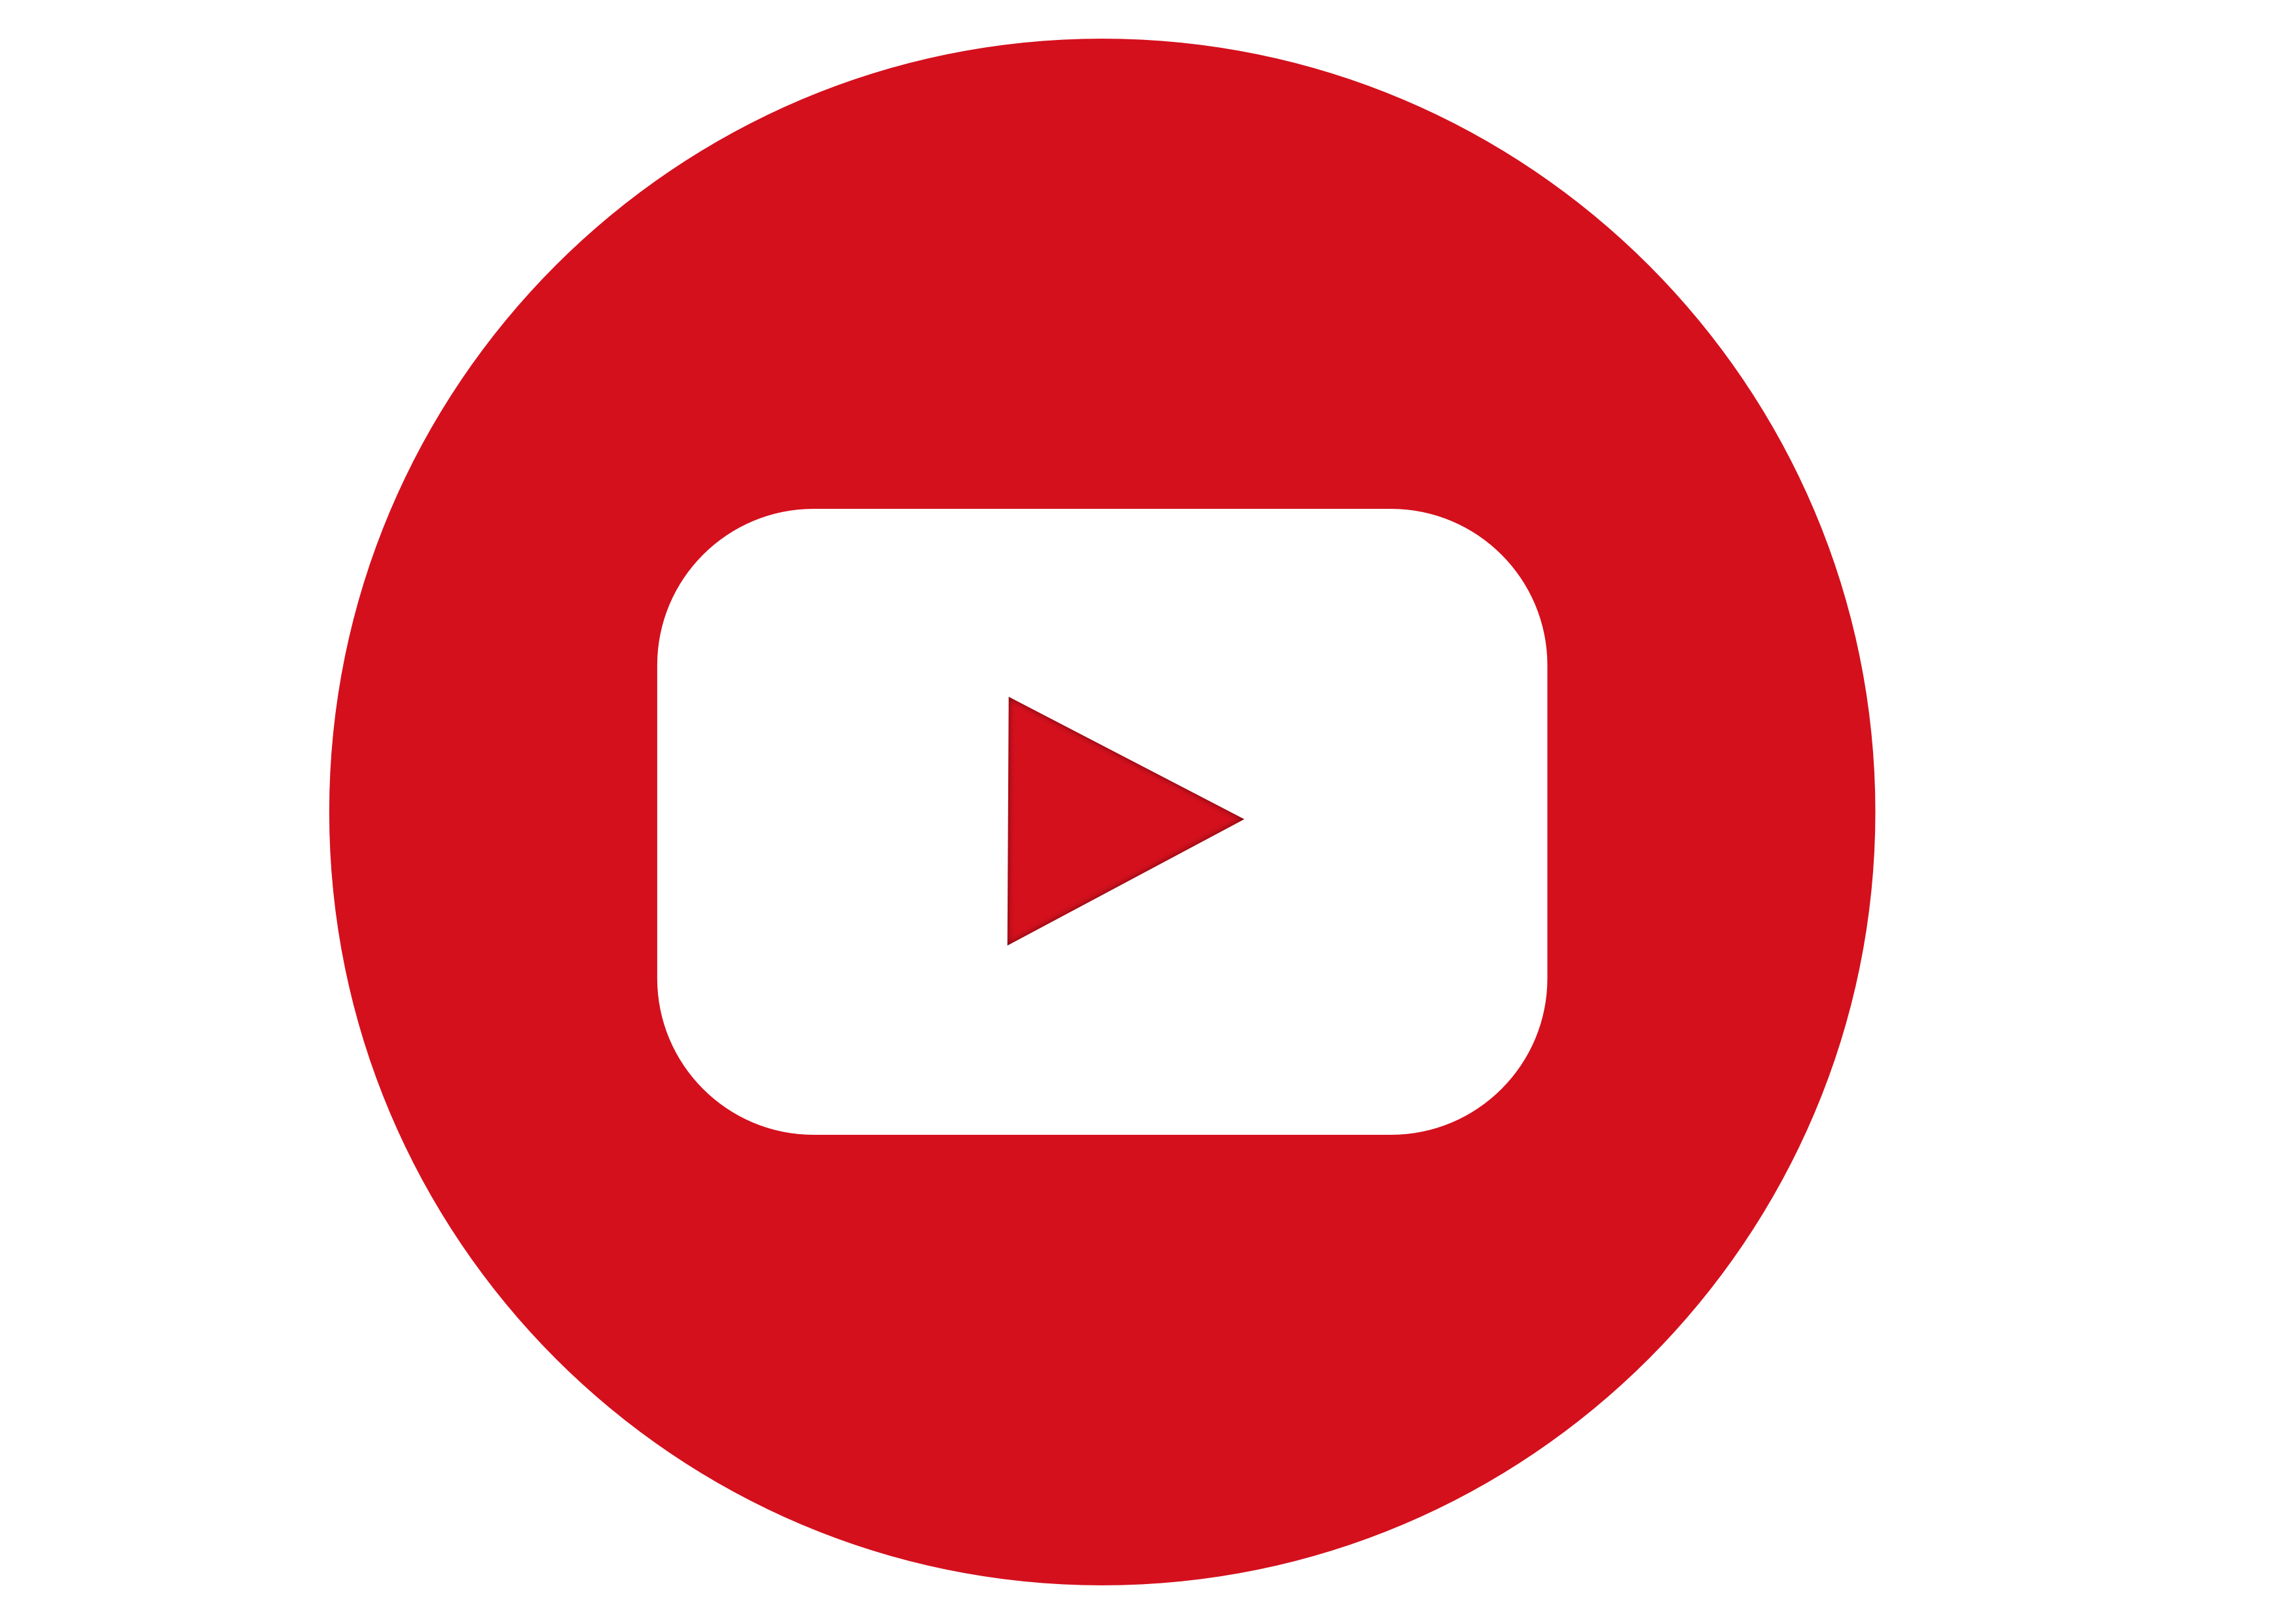 Ne официальная страница ютуб com. Ютуб лого. Значок ютуб PNG. Логотип youtube на белом фоне. Ютуб лого без фона.